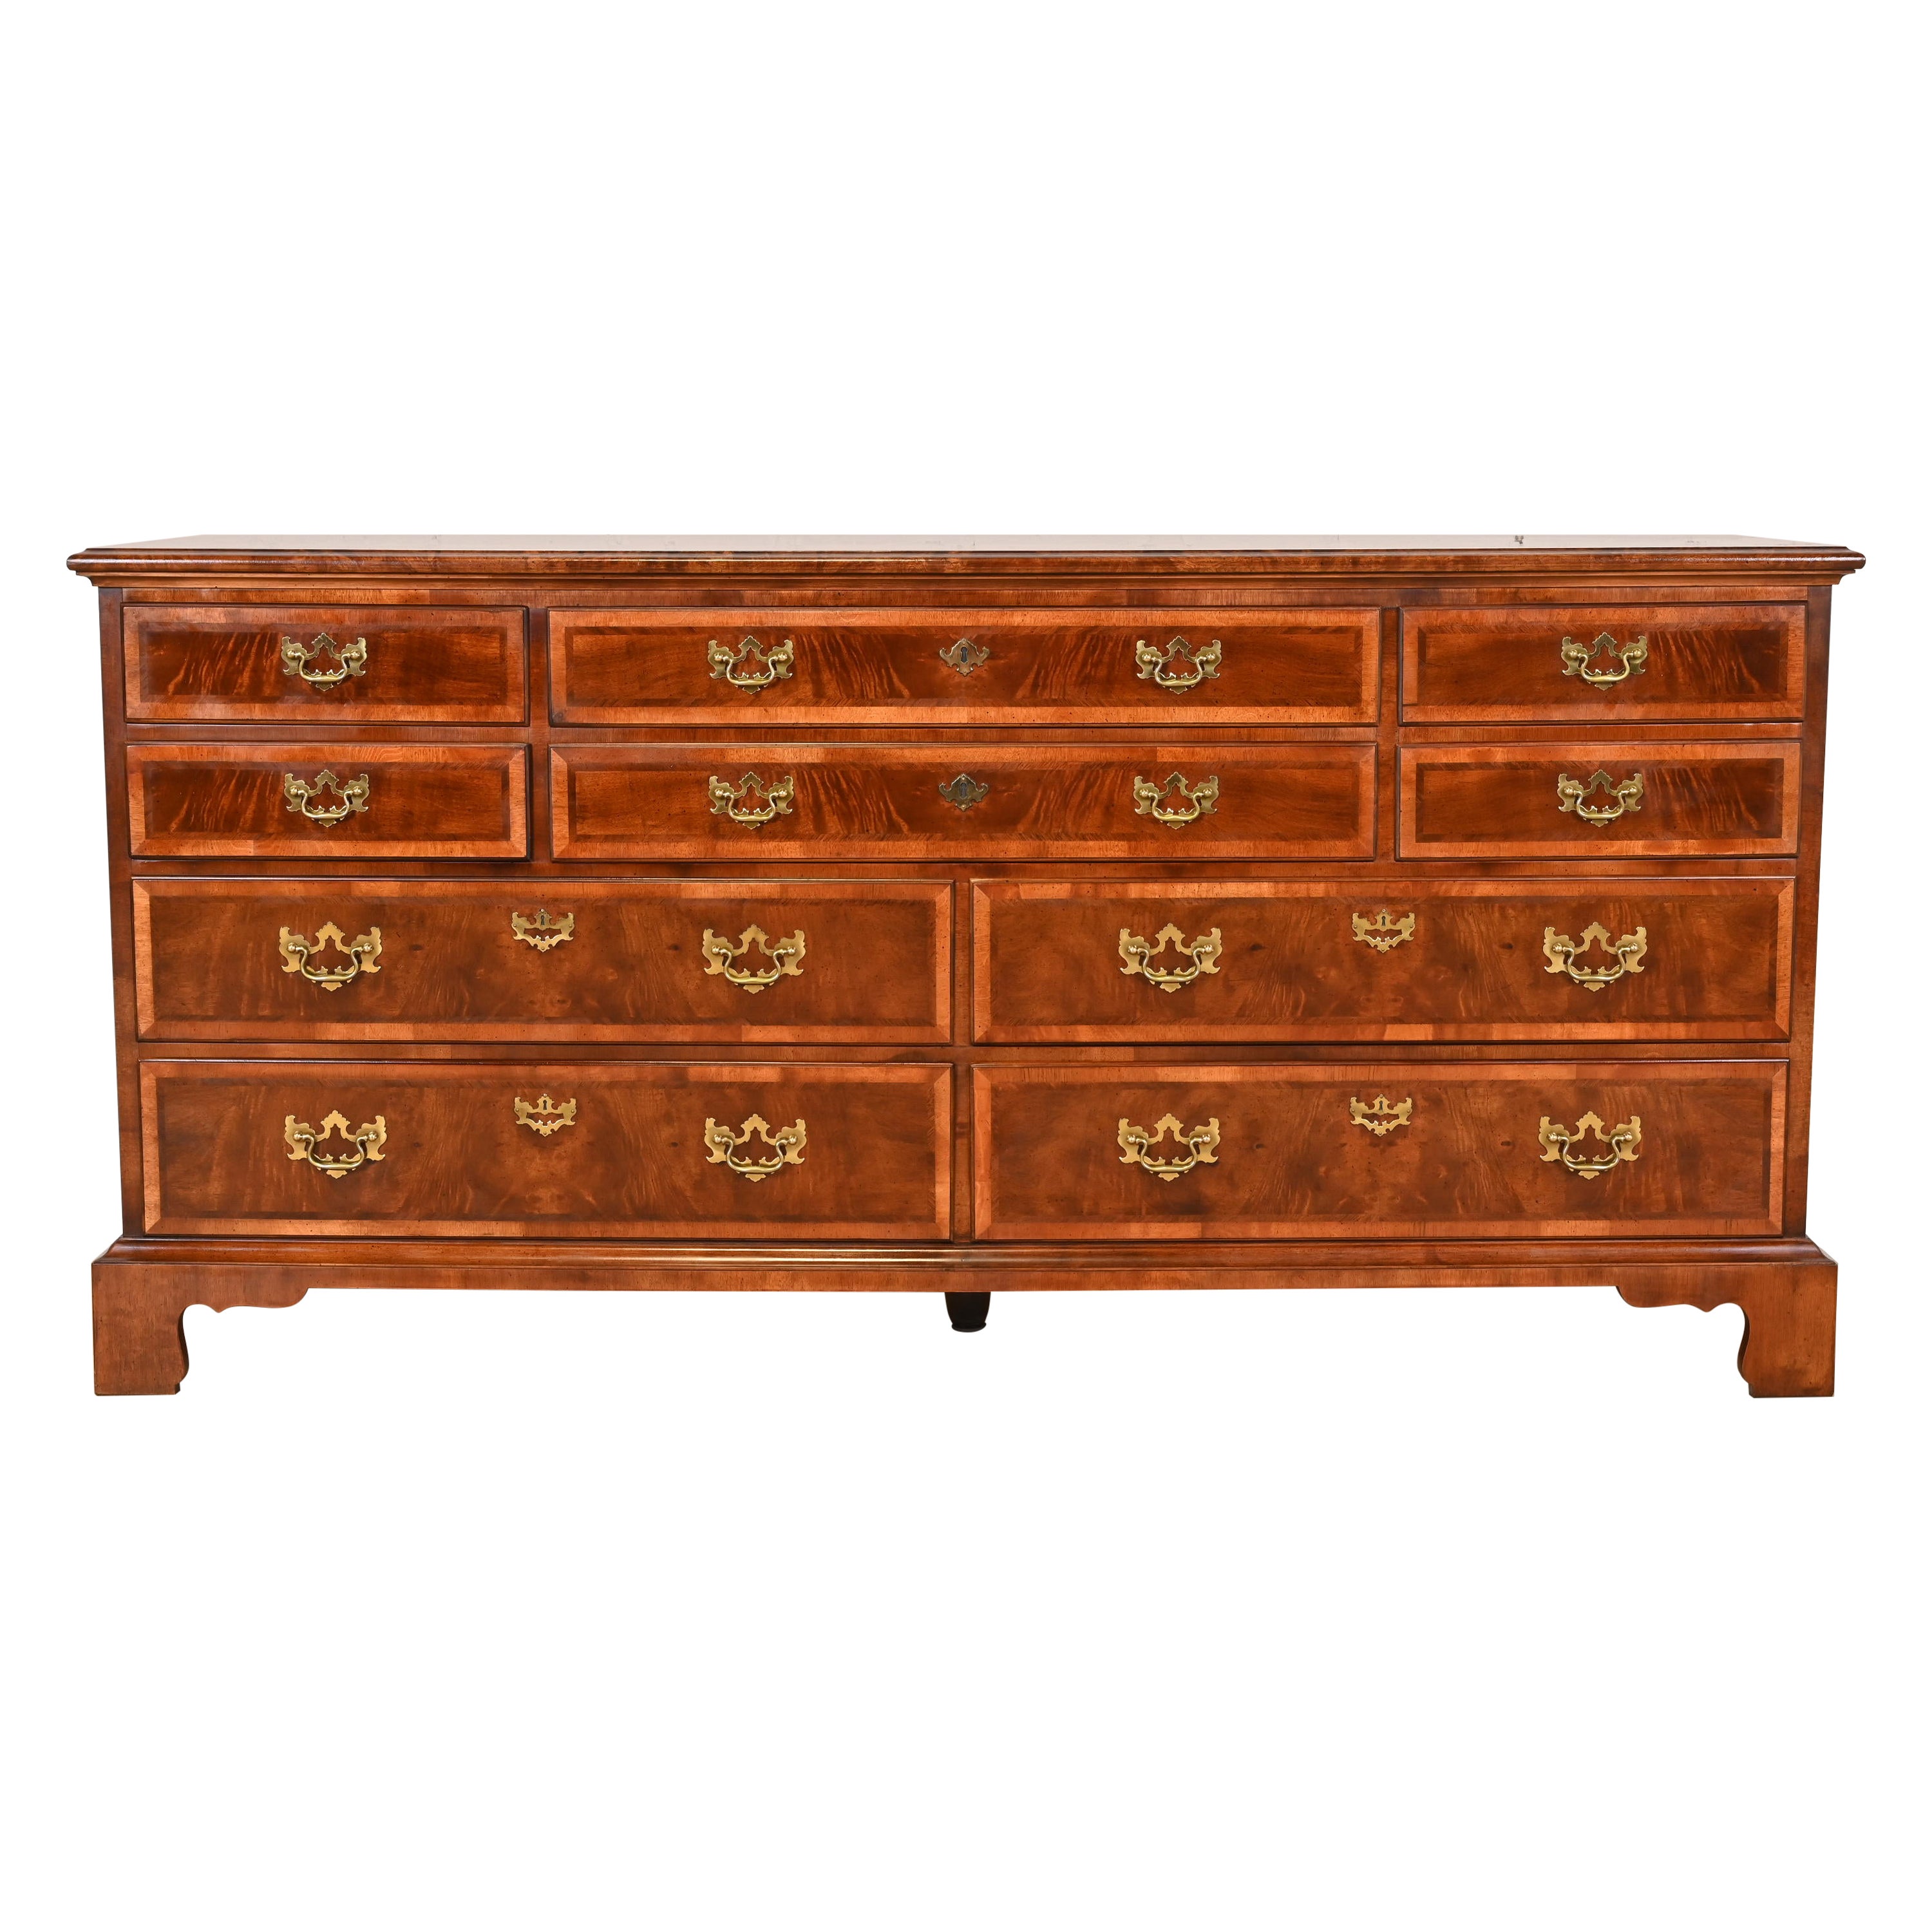 Henredon Georgian Mahogany and Burl Wood Ten-Drawer Dresser or Credenza